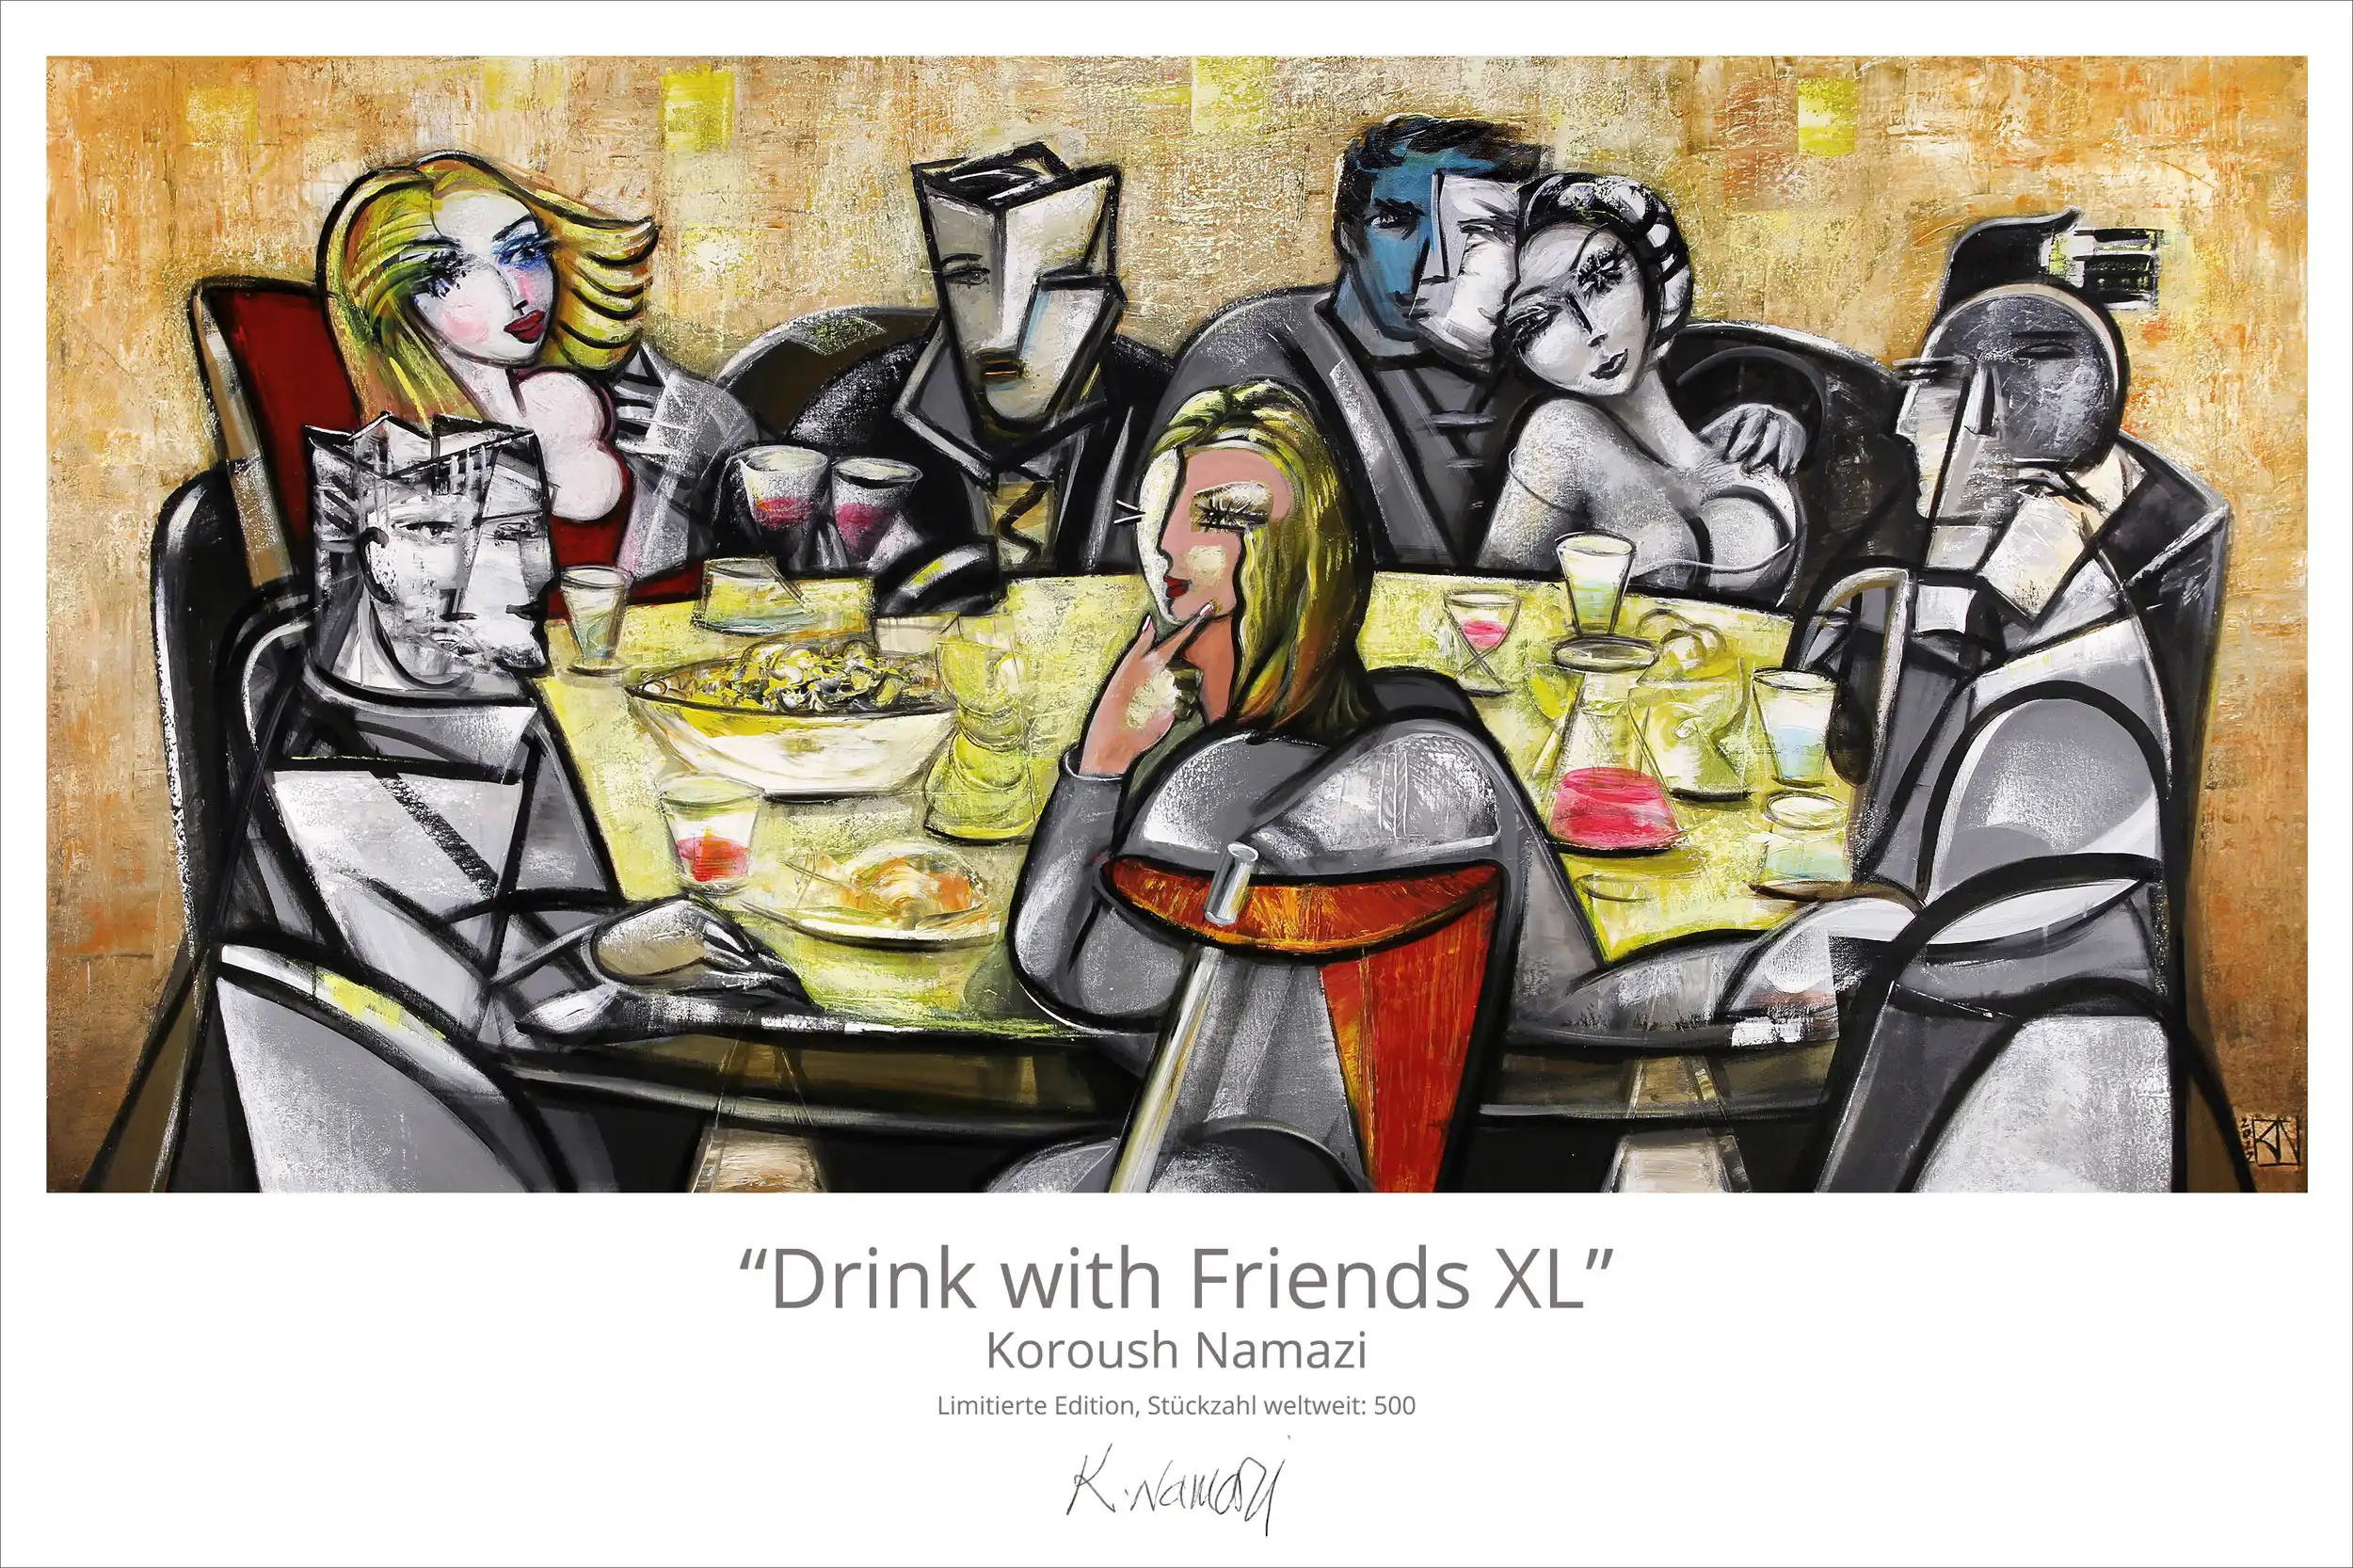 Limitierte Edition auf Papier, K. Namazi: "Drink with Friends XL", Fineartprint